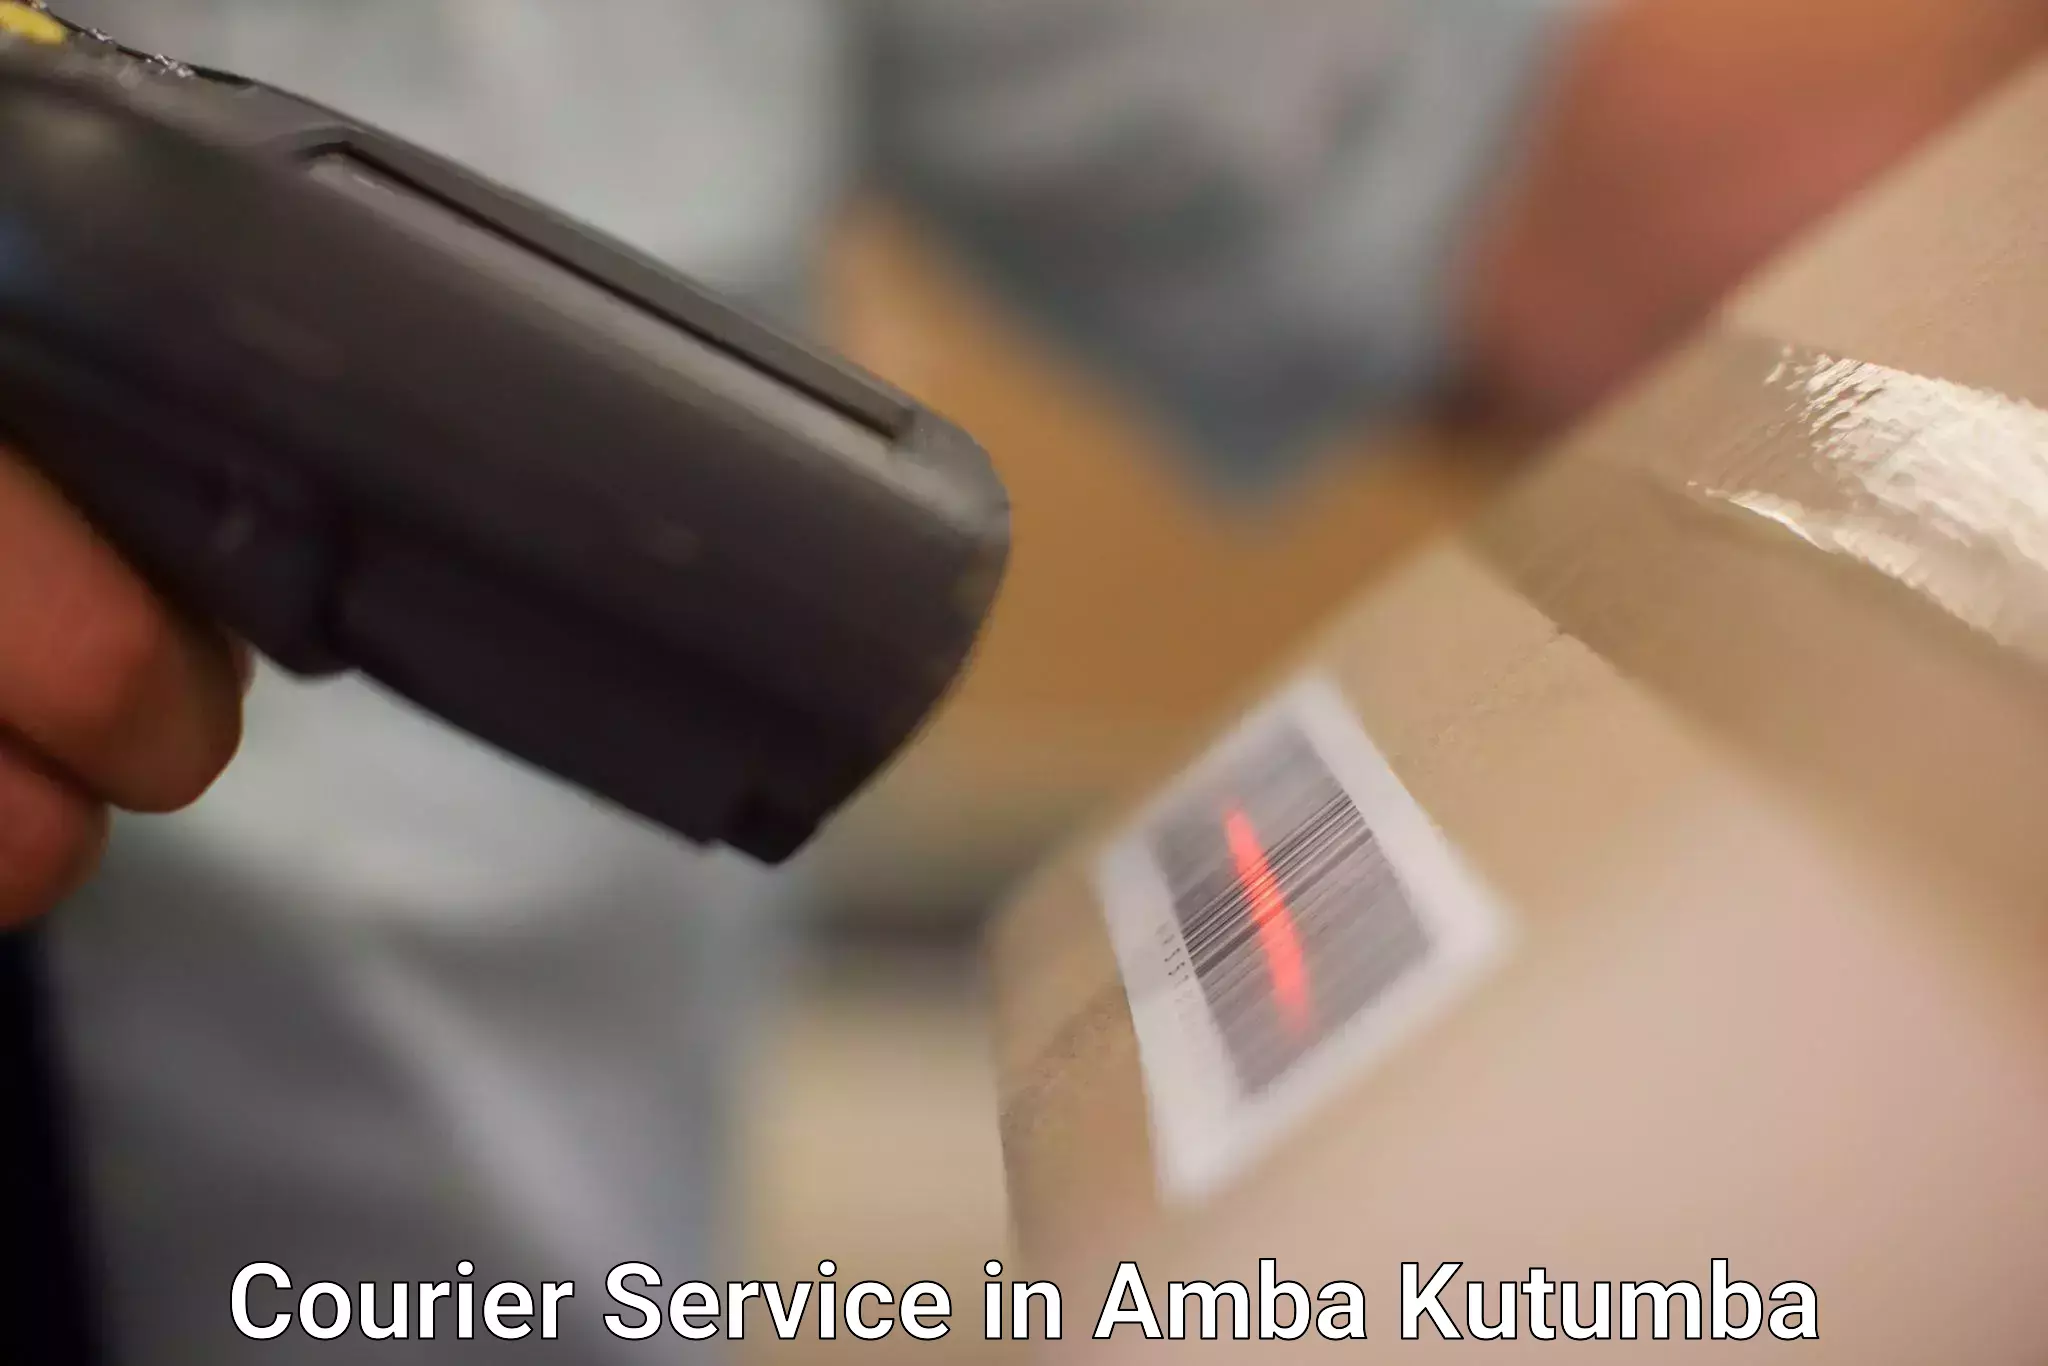 Sustainable shipping practices in Amba Kutumba